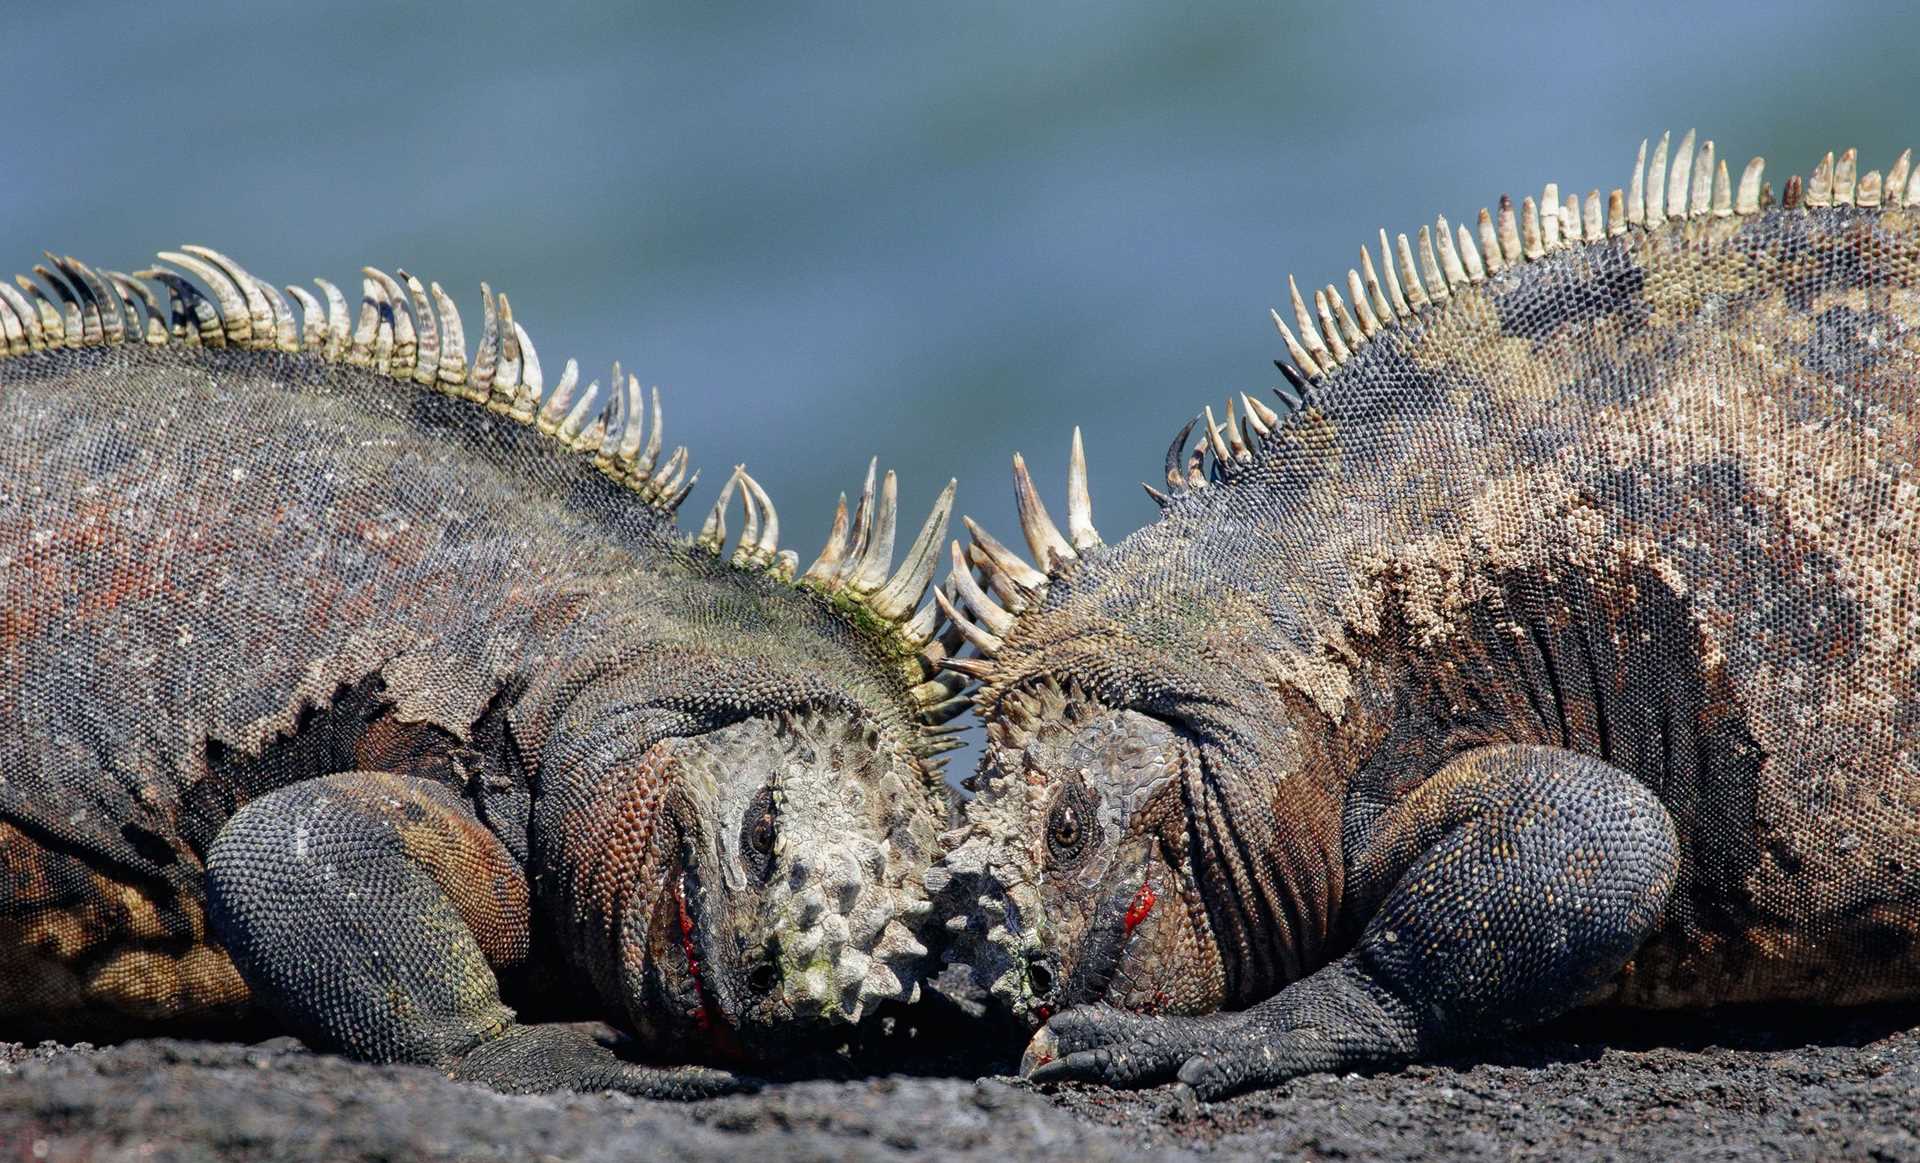 marine iguanas fighting